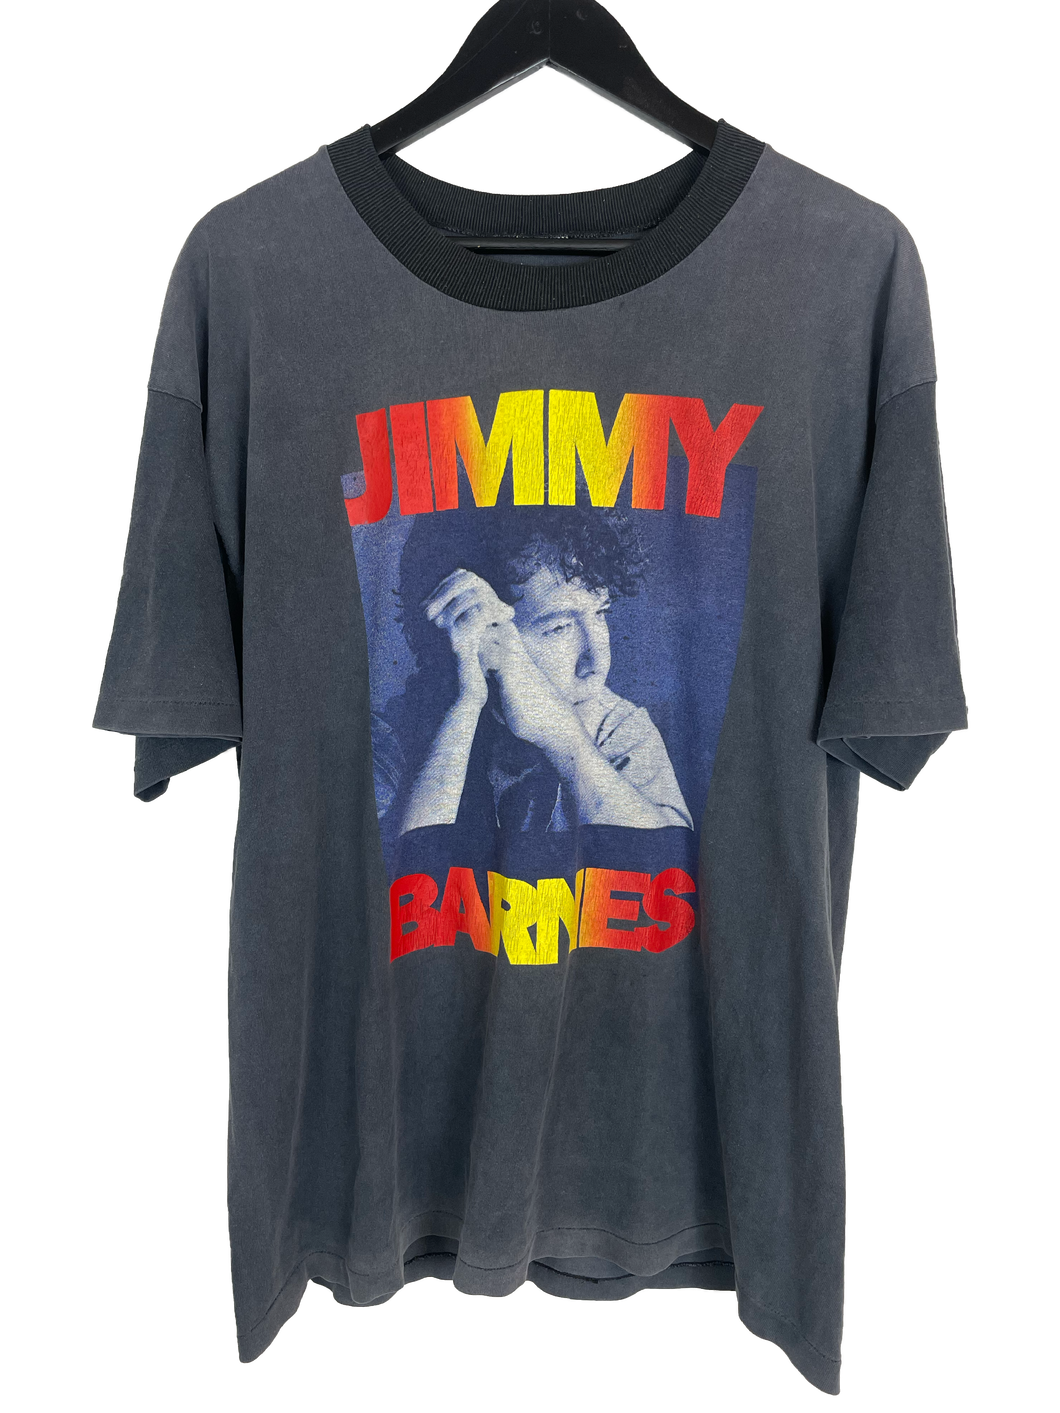 1991 JIMMY BARNES LOVE IS ENOUGH TOUR TEE ‘SS’ - XL